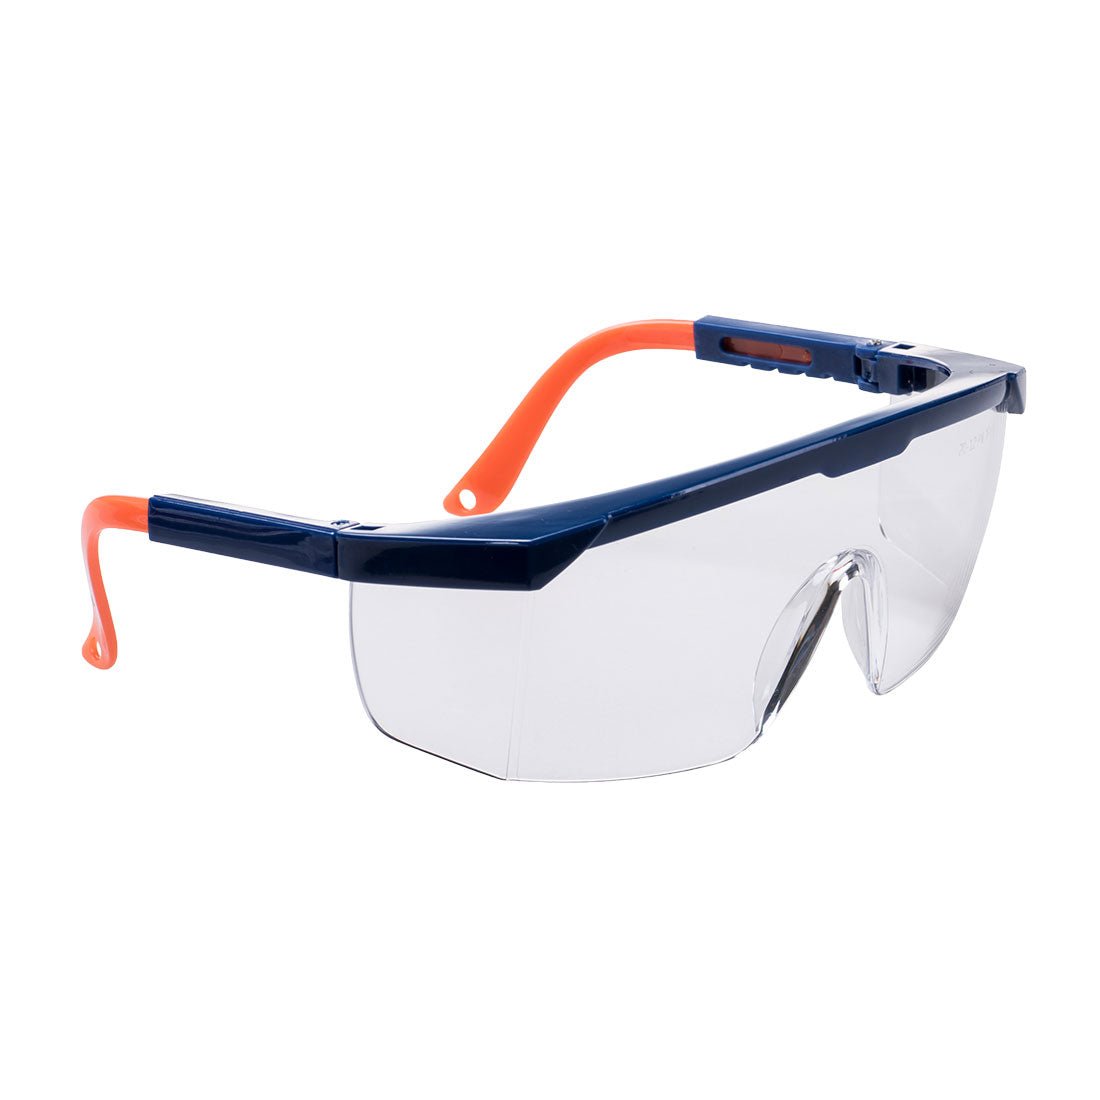 PS33 - PW Schutzbrille Eye Screen Plus Klar - arbeitskleidung-gmbh